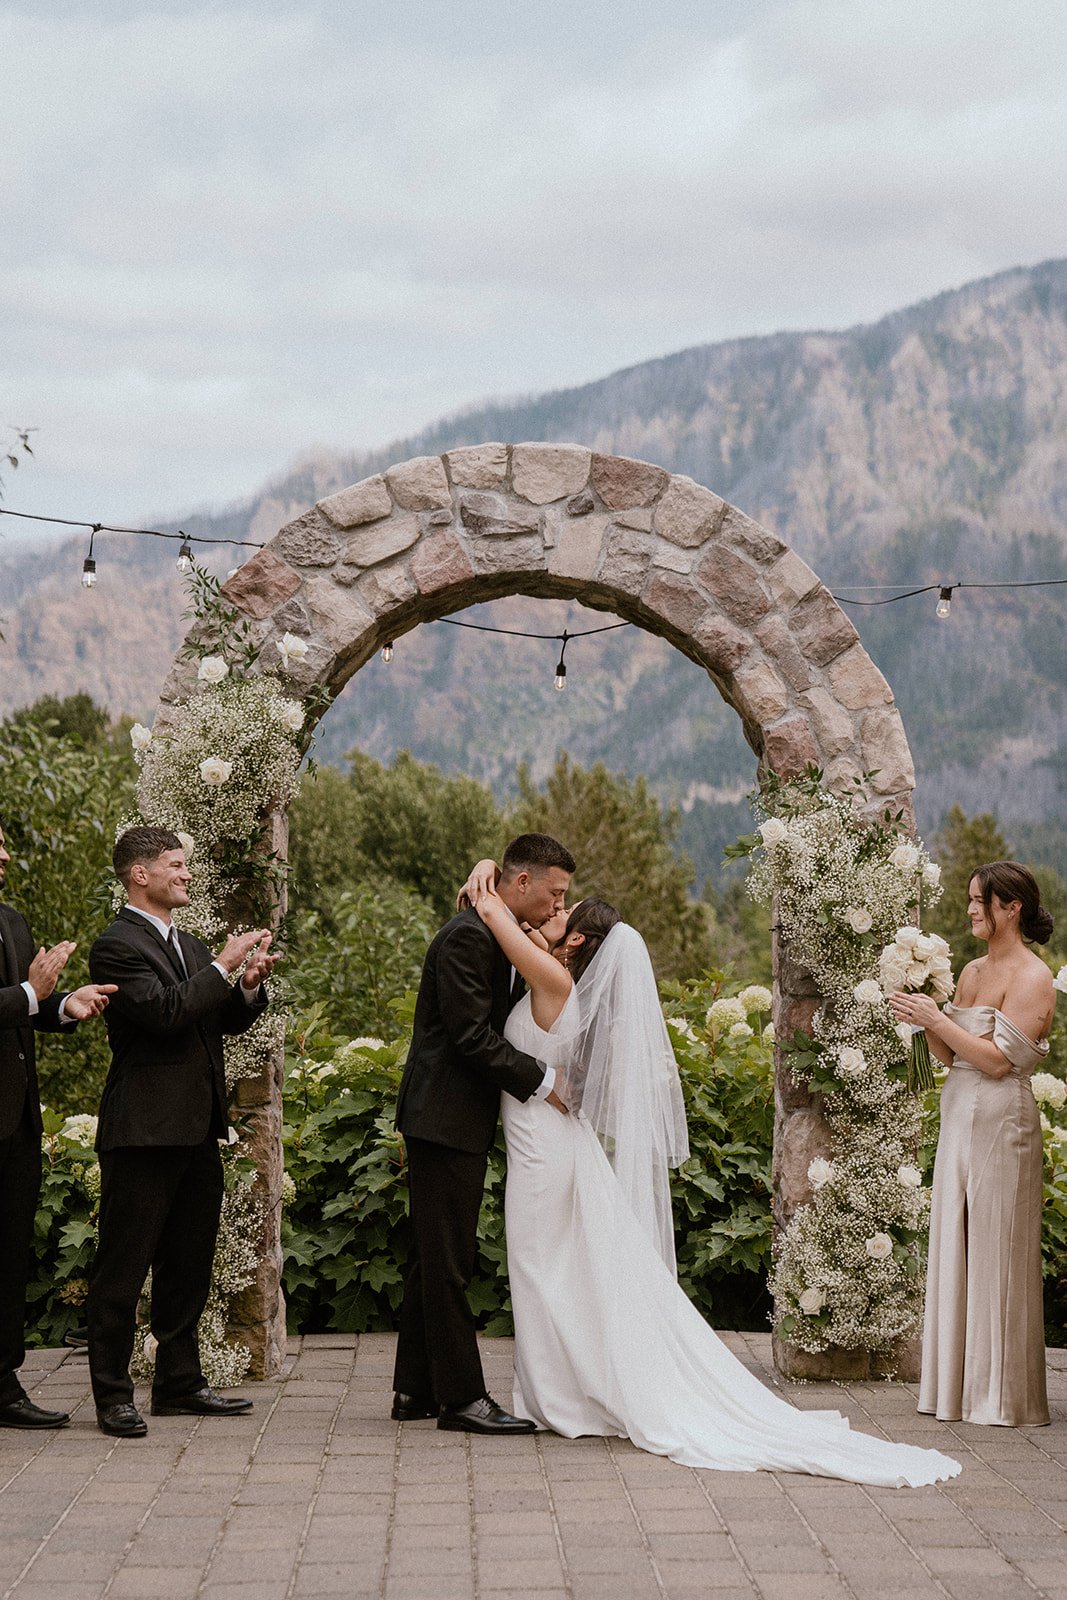 Made-With-love-Harry-Wedding-Dress-Portland-Oregon-14.jpg